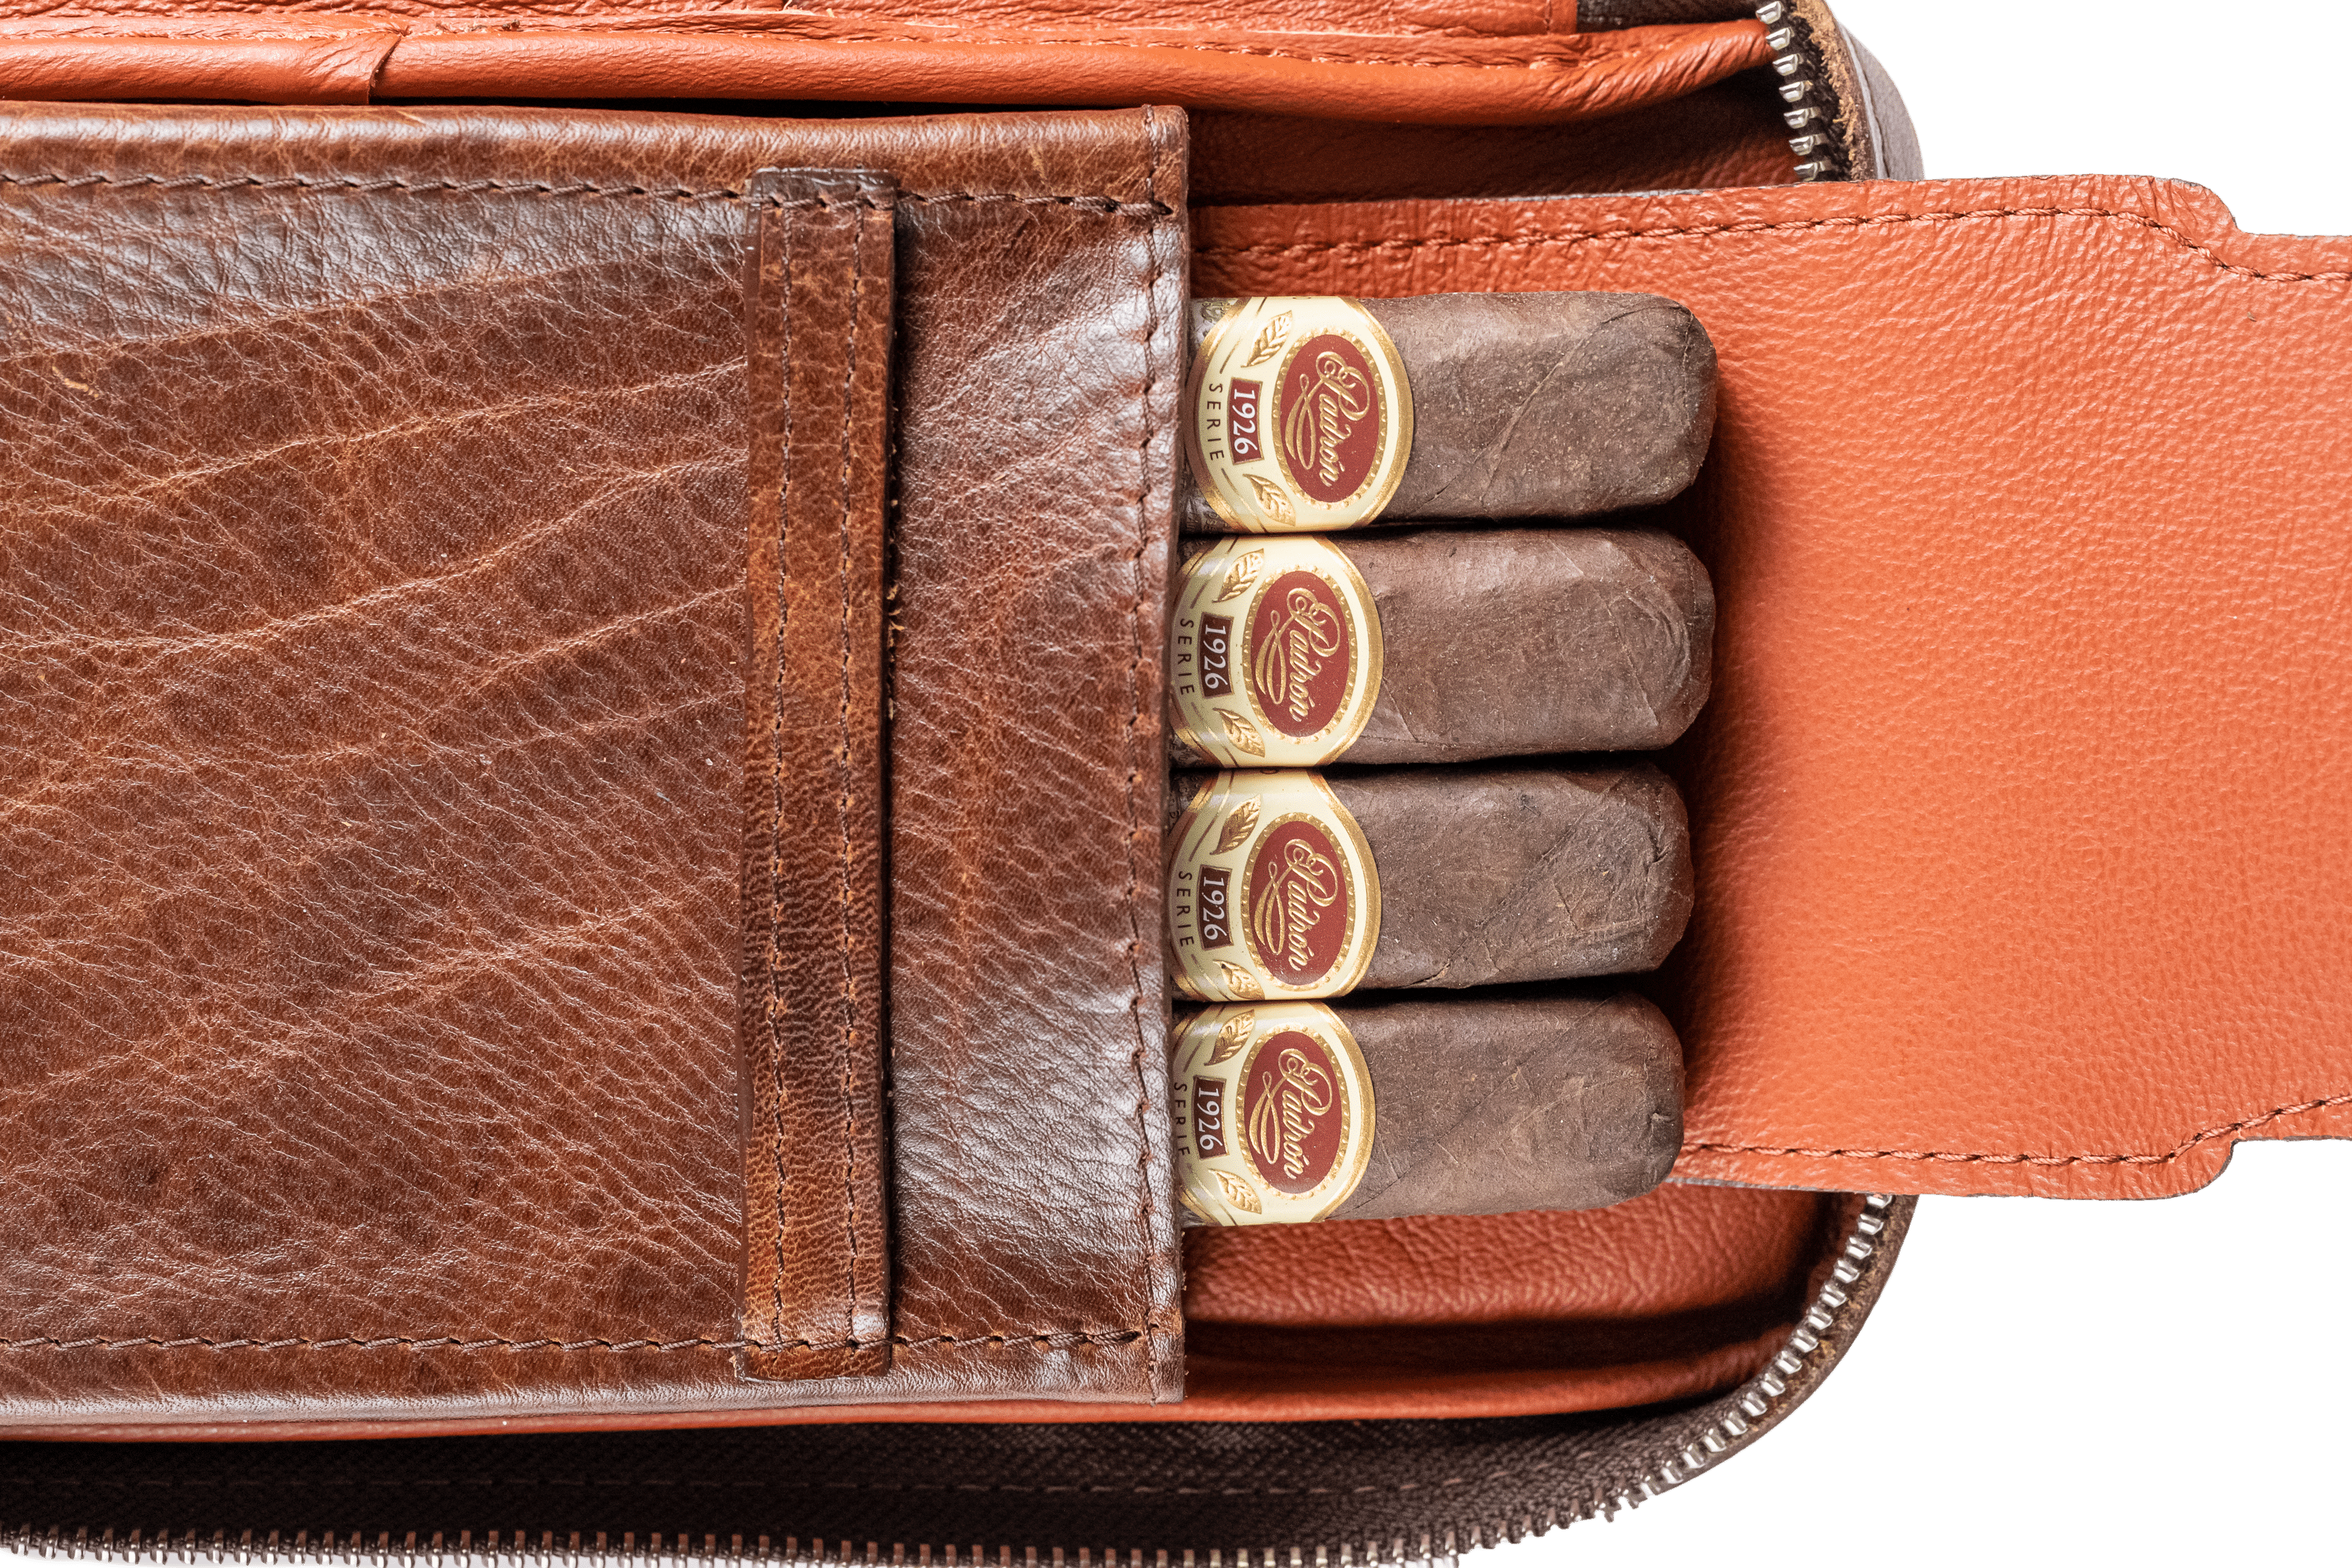 Peter James Core Series Cigar Case - Davidoff of Geneva since 1911